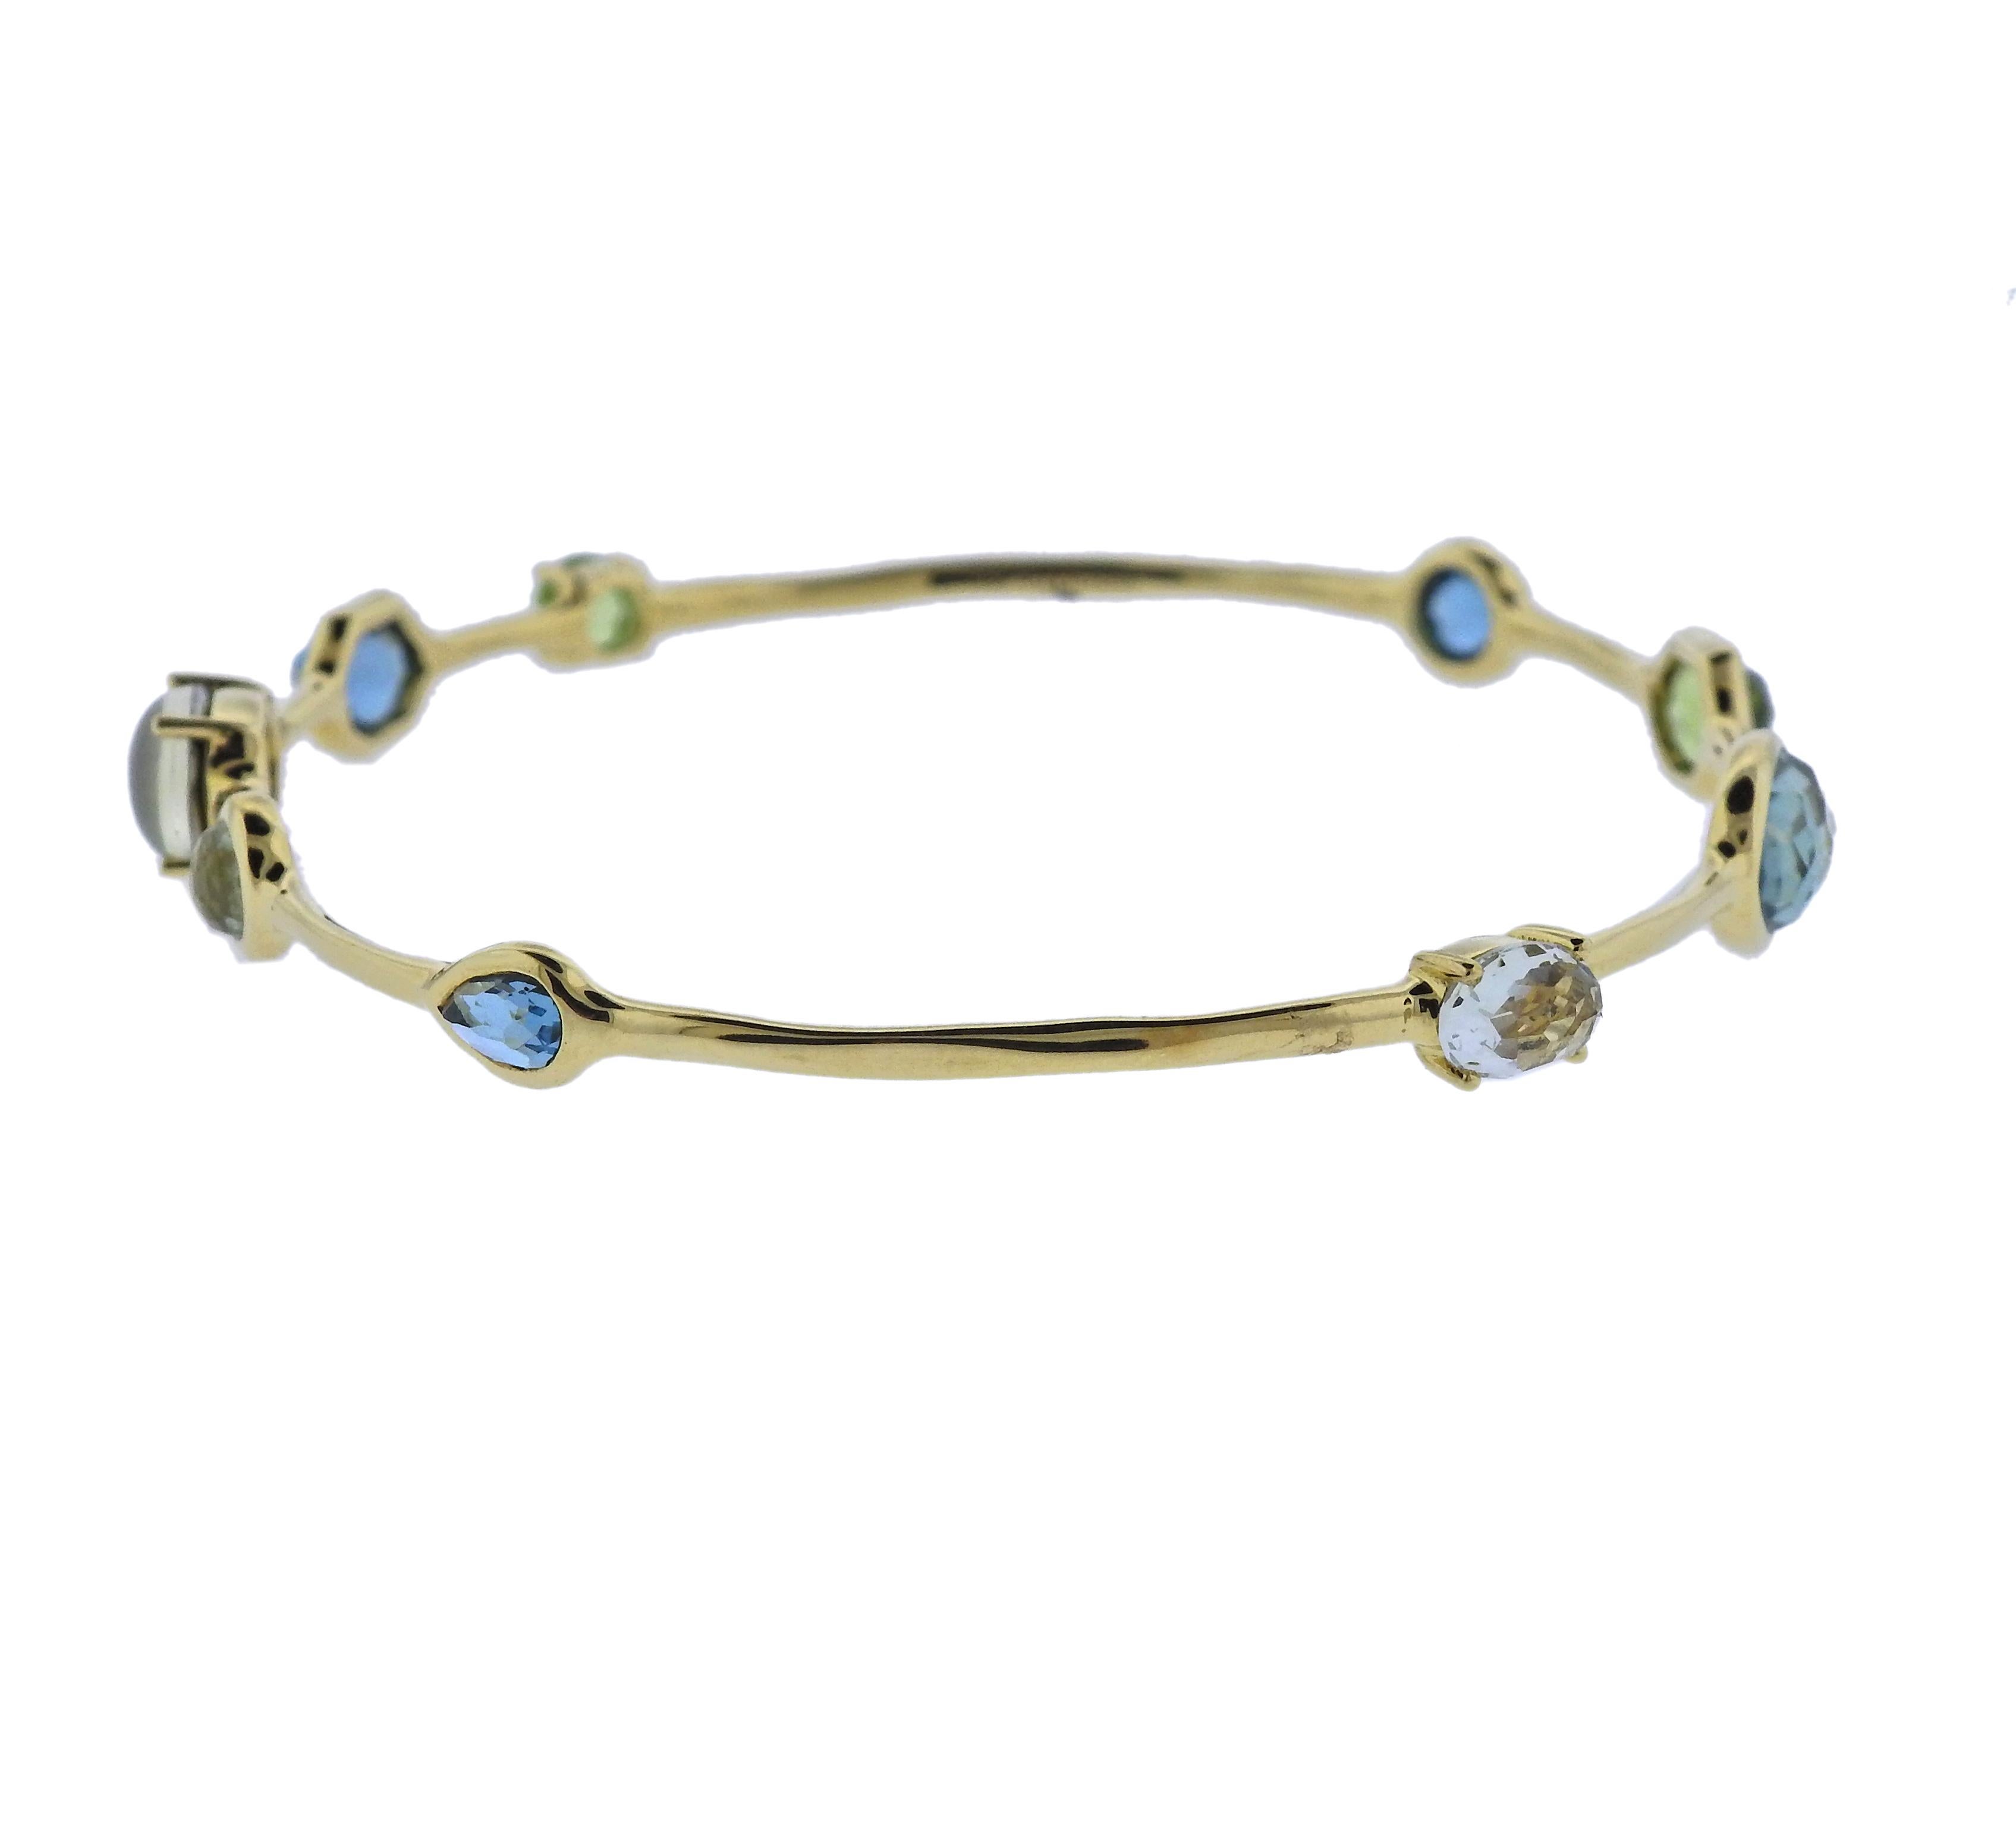 18k gold bangle bracelet by Ippolita, set with Quartz, Topaz, Citrine.  Bracelet will fit approx. 7 1/2 